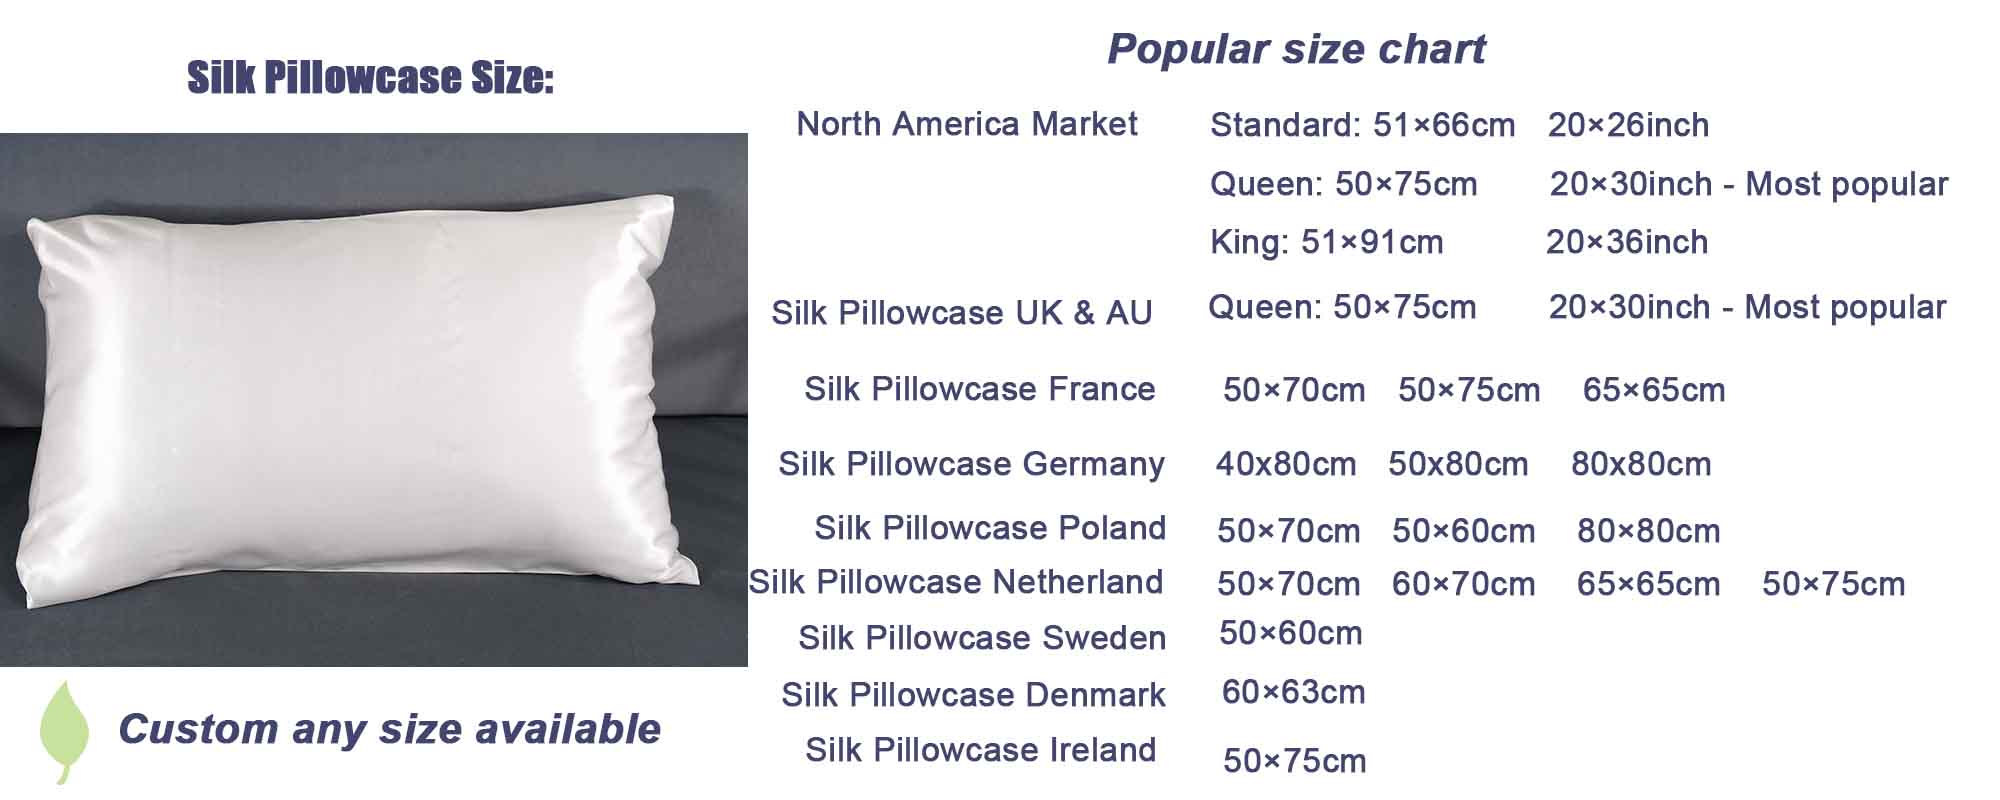 silk pillowcase size chart